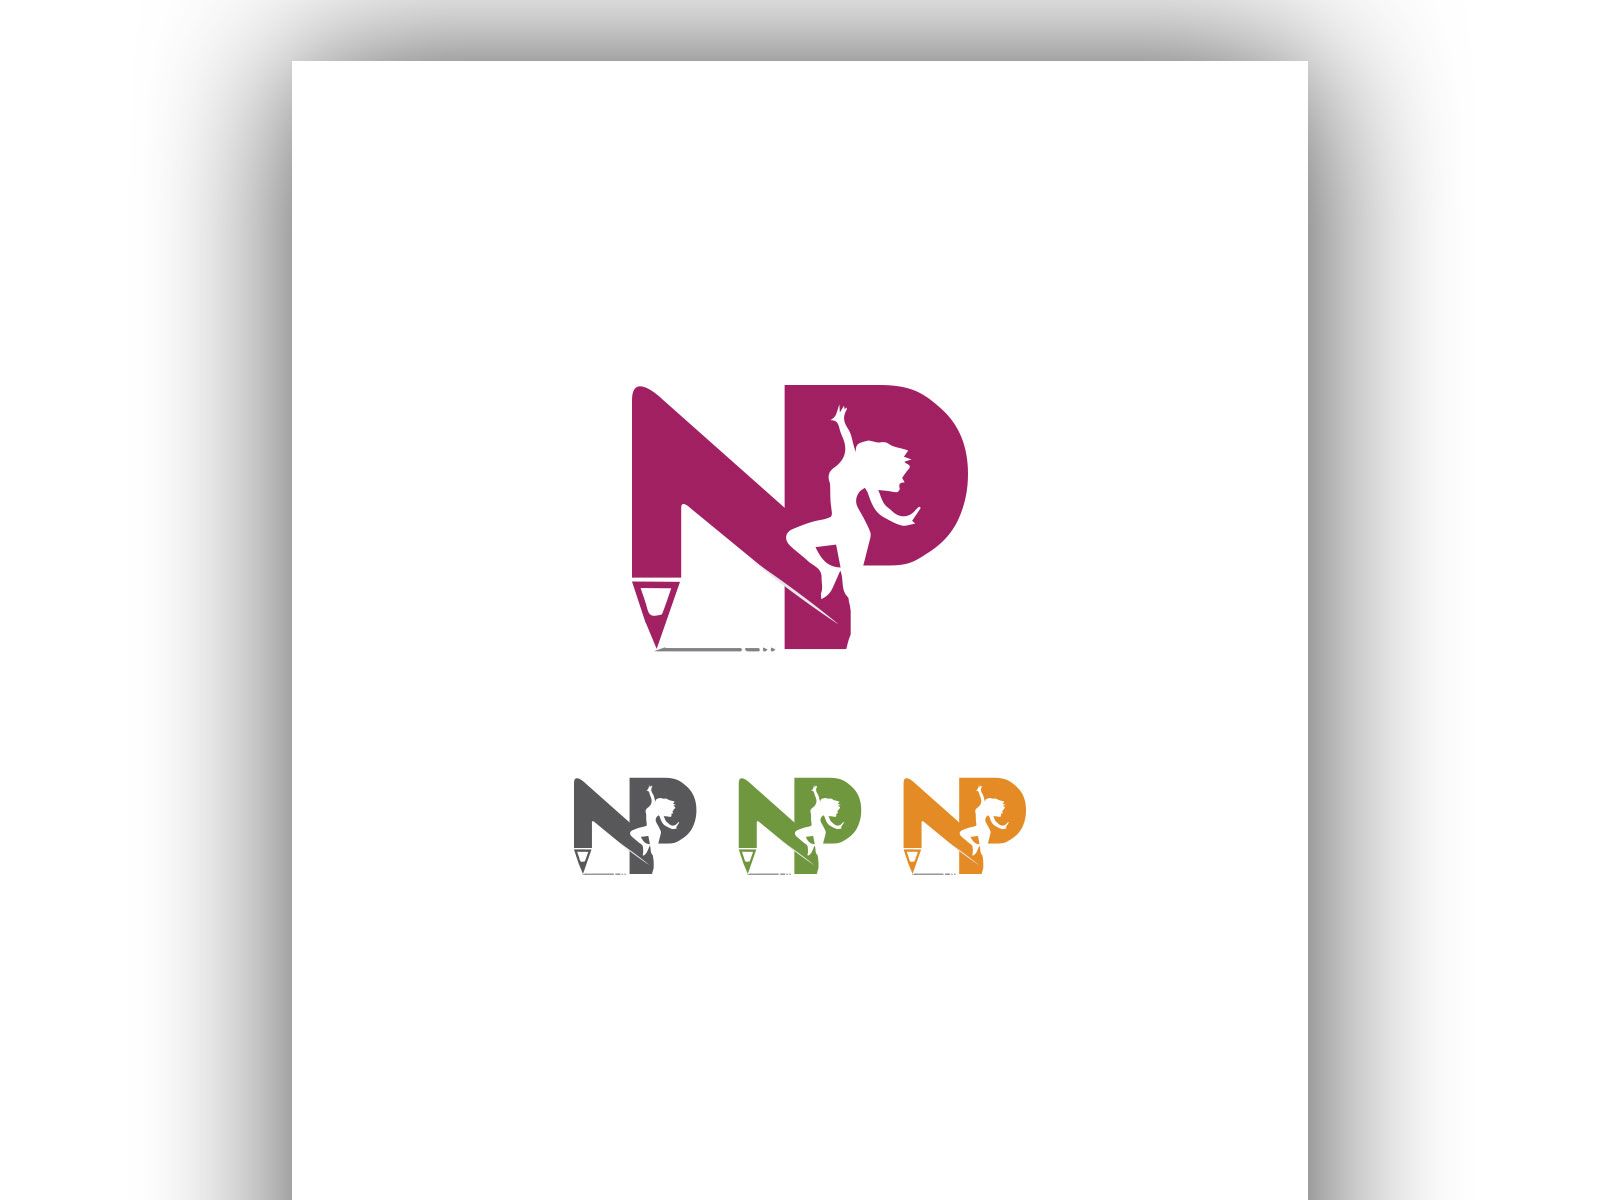 Wedding Logo Wedding Monogram Digital Download MM -  Israel